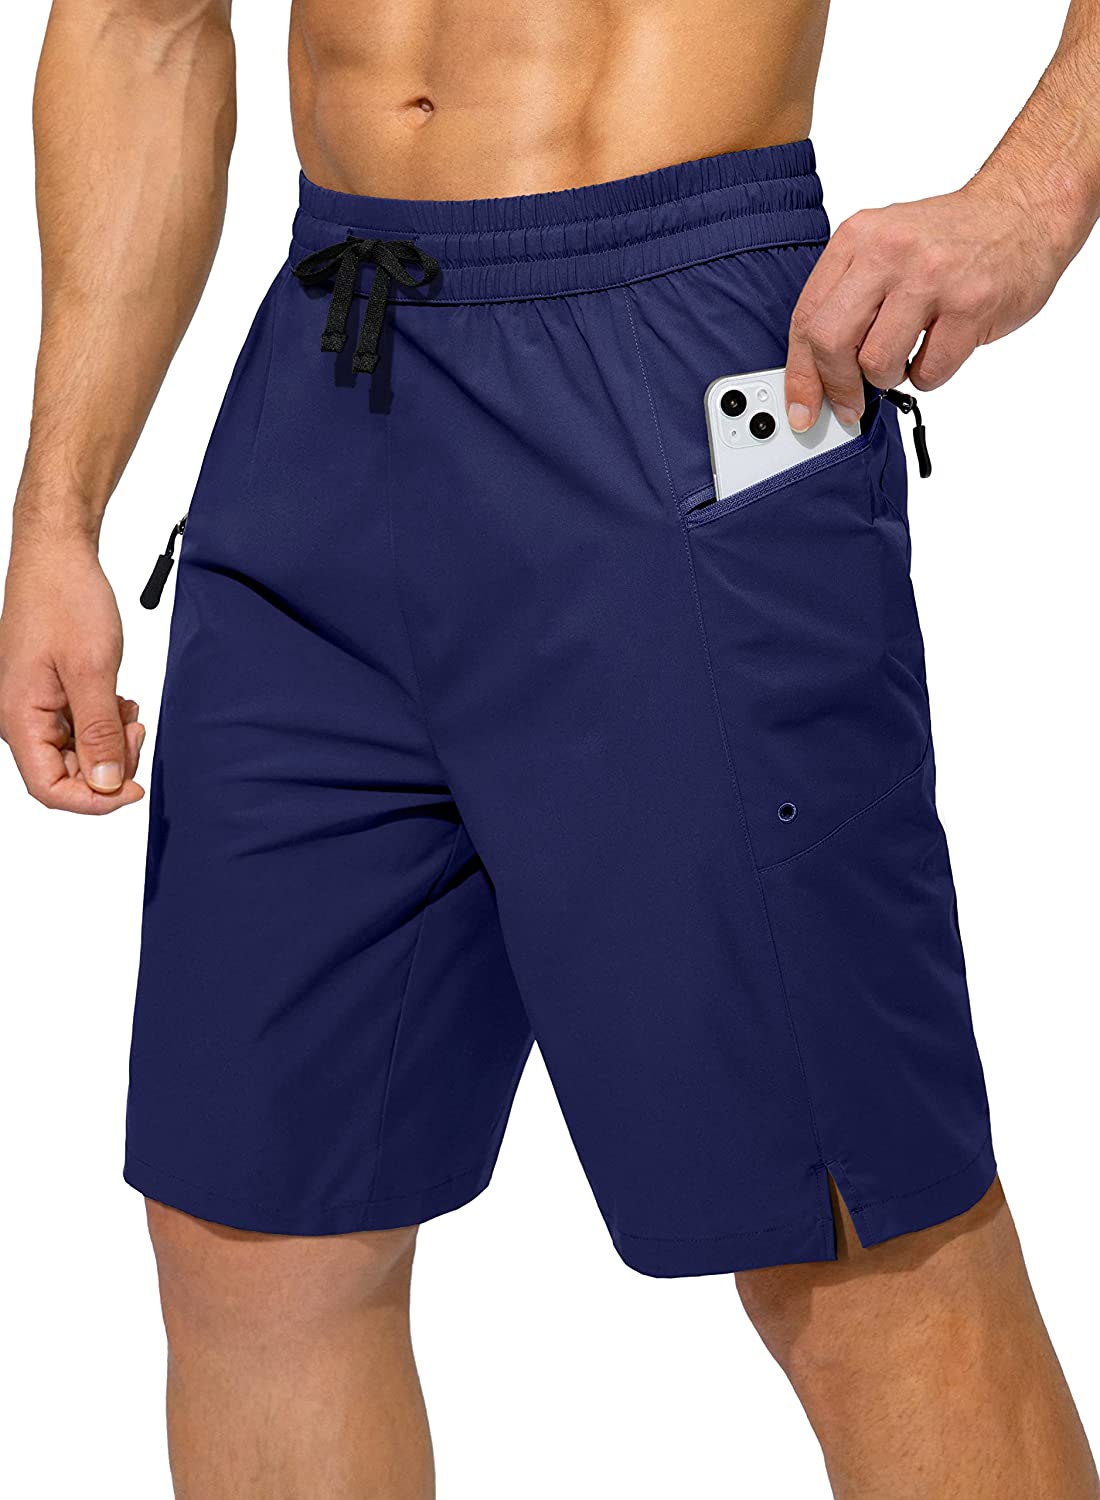 Women's Swim Shorts with Zipper Pockets